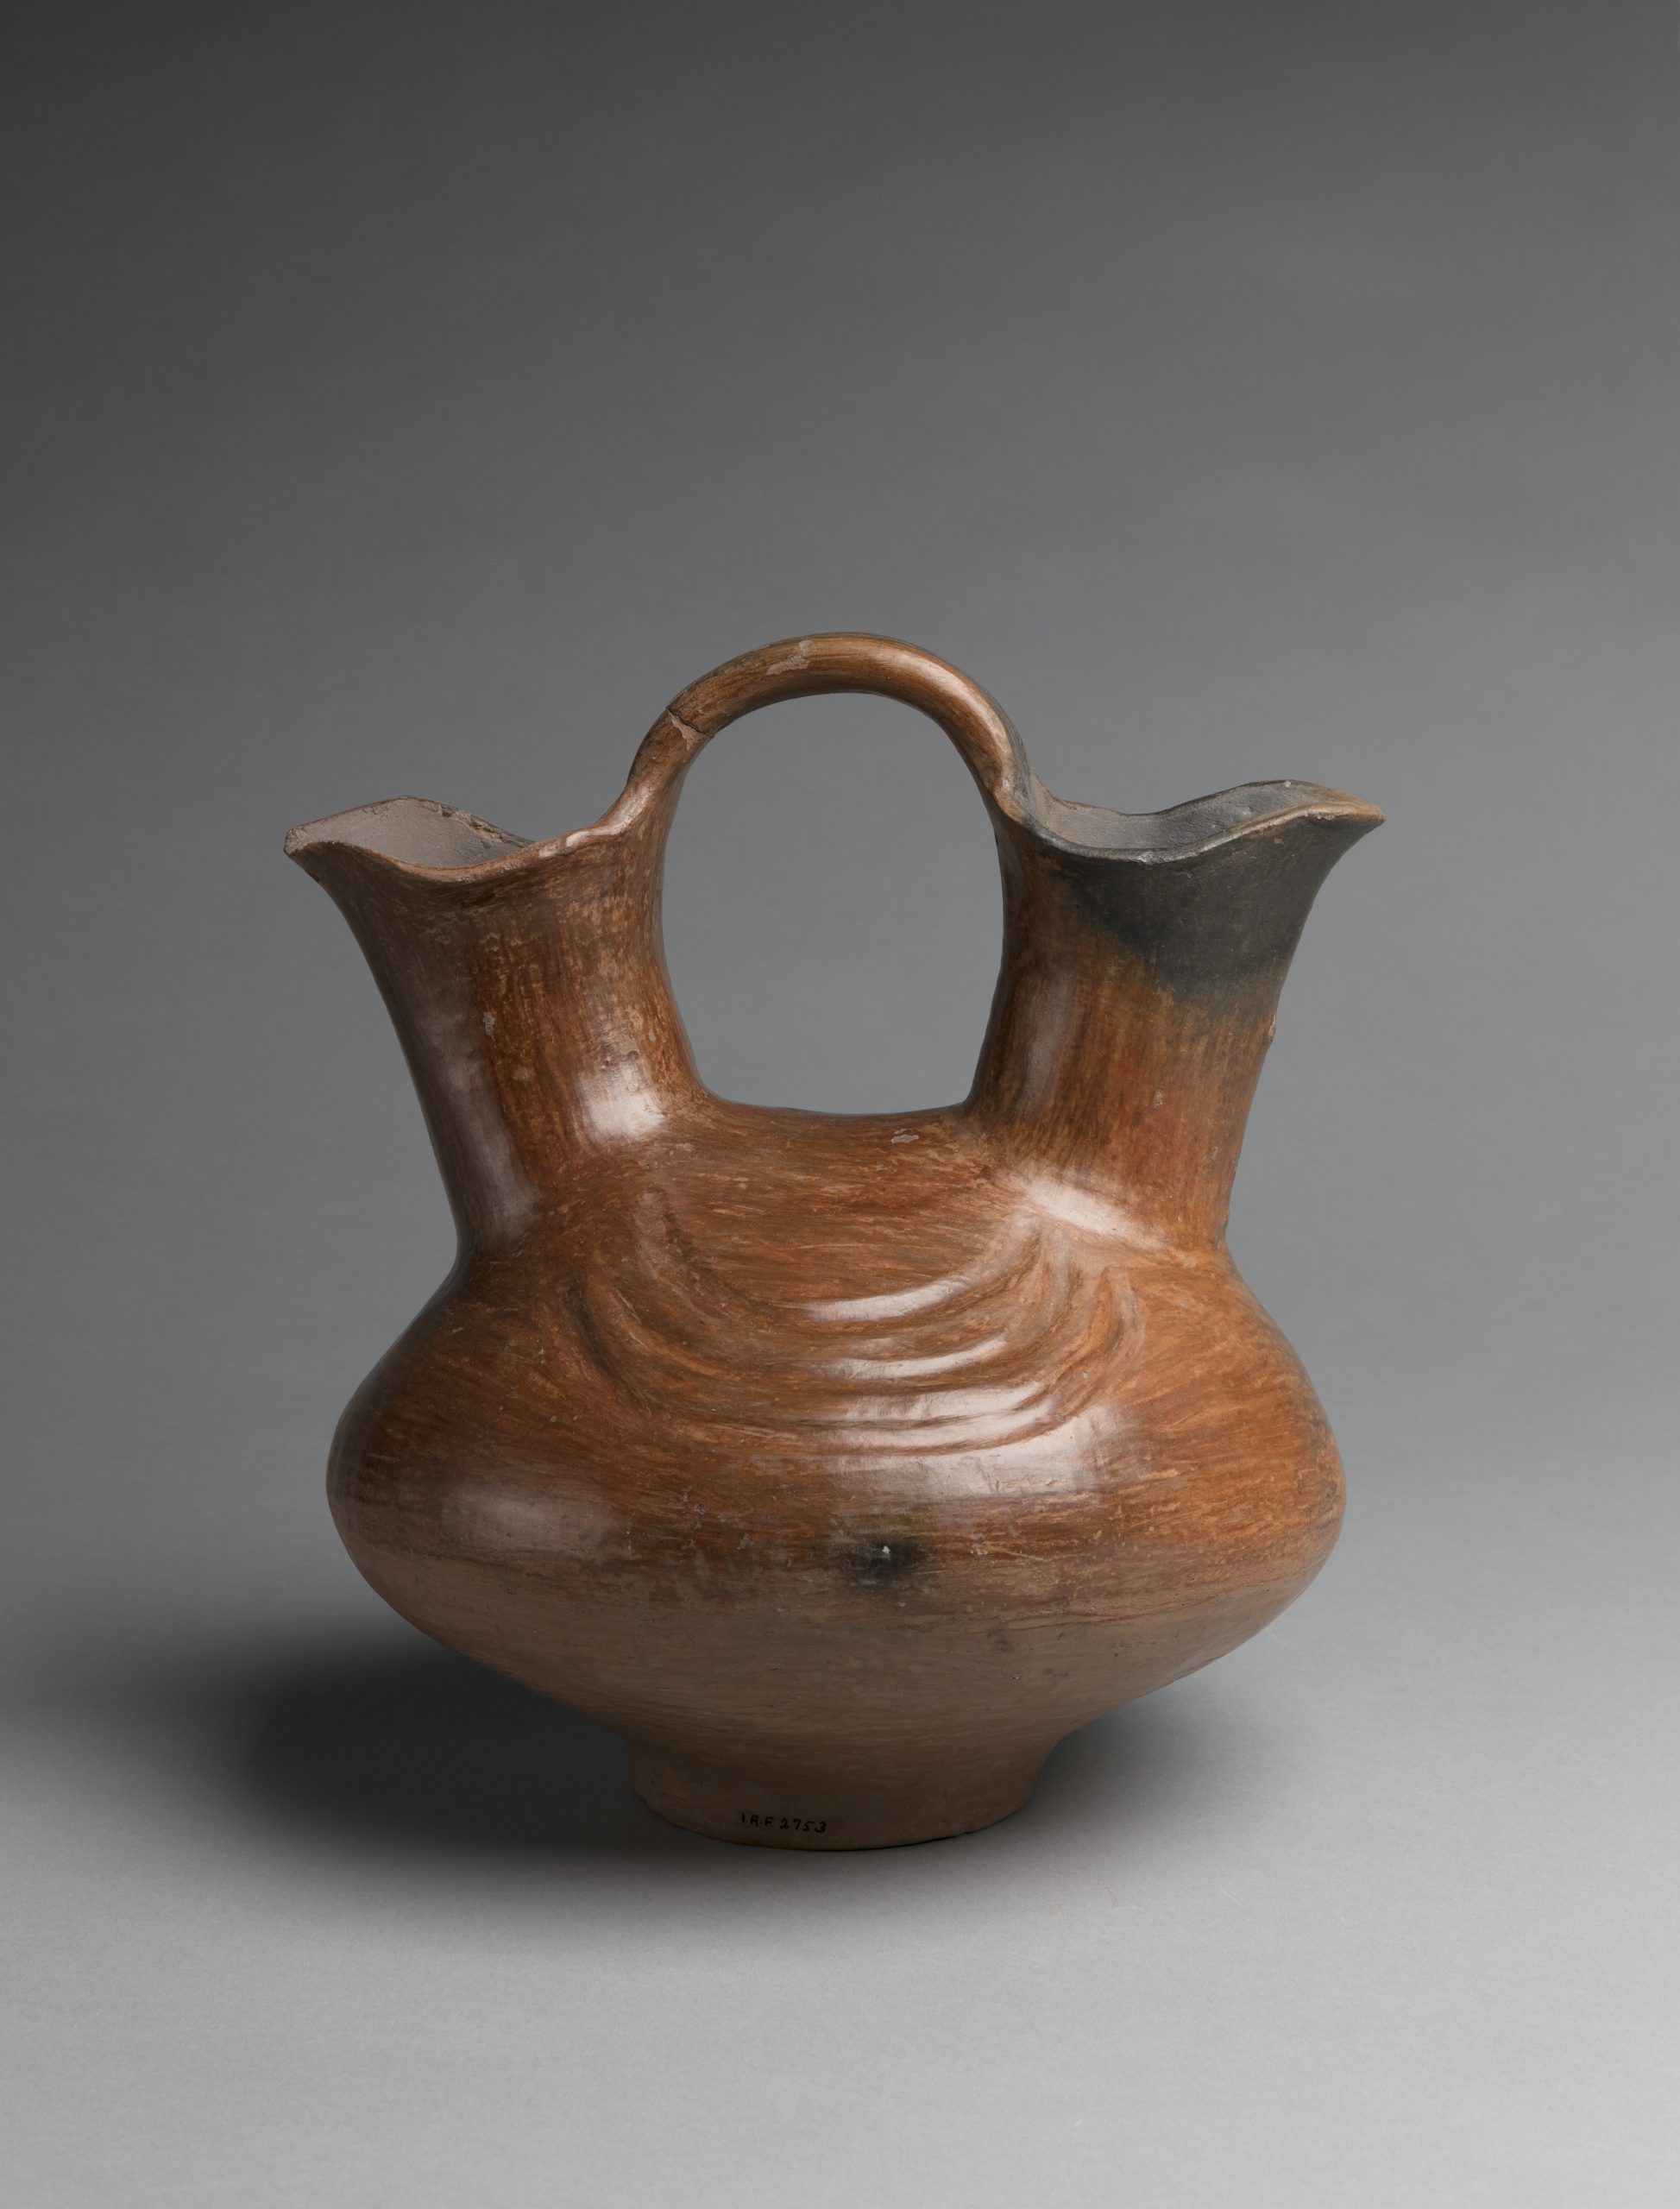 Wedding Jar, Artist unknown (Ohkay Owingeh Pueblo), c.1900-1920, clay, 11 ¼” x 24 13/16”. Cat. no. IAF.2753. Photo by Addison Doty.